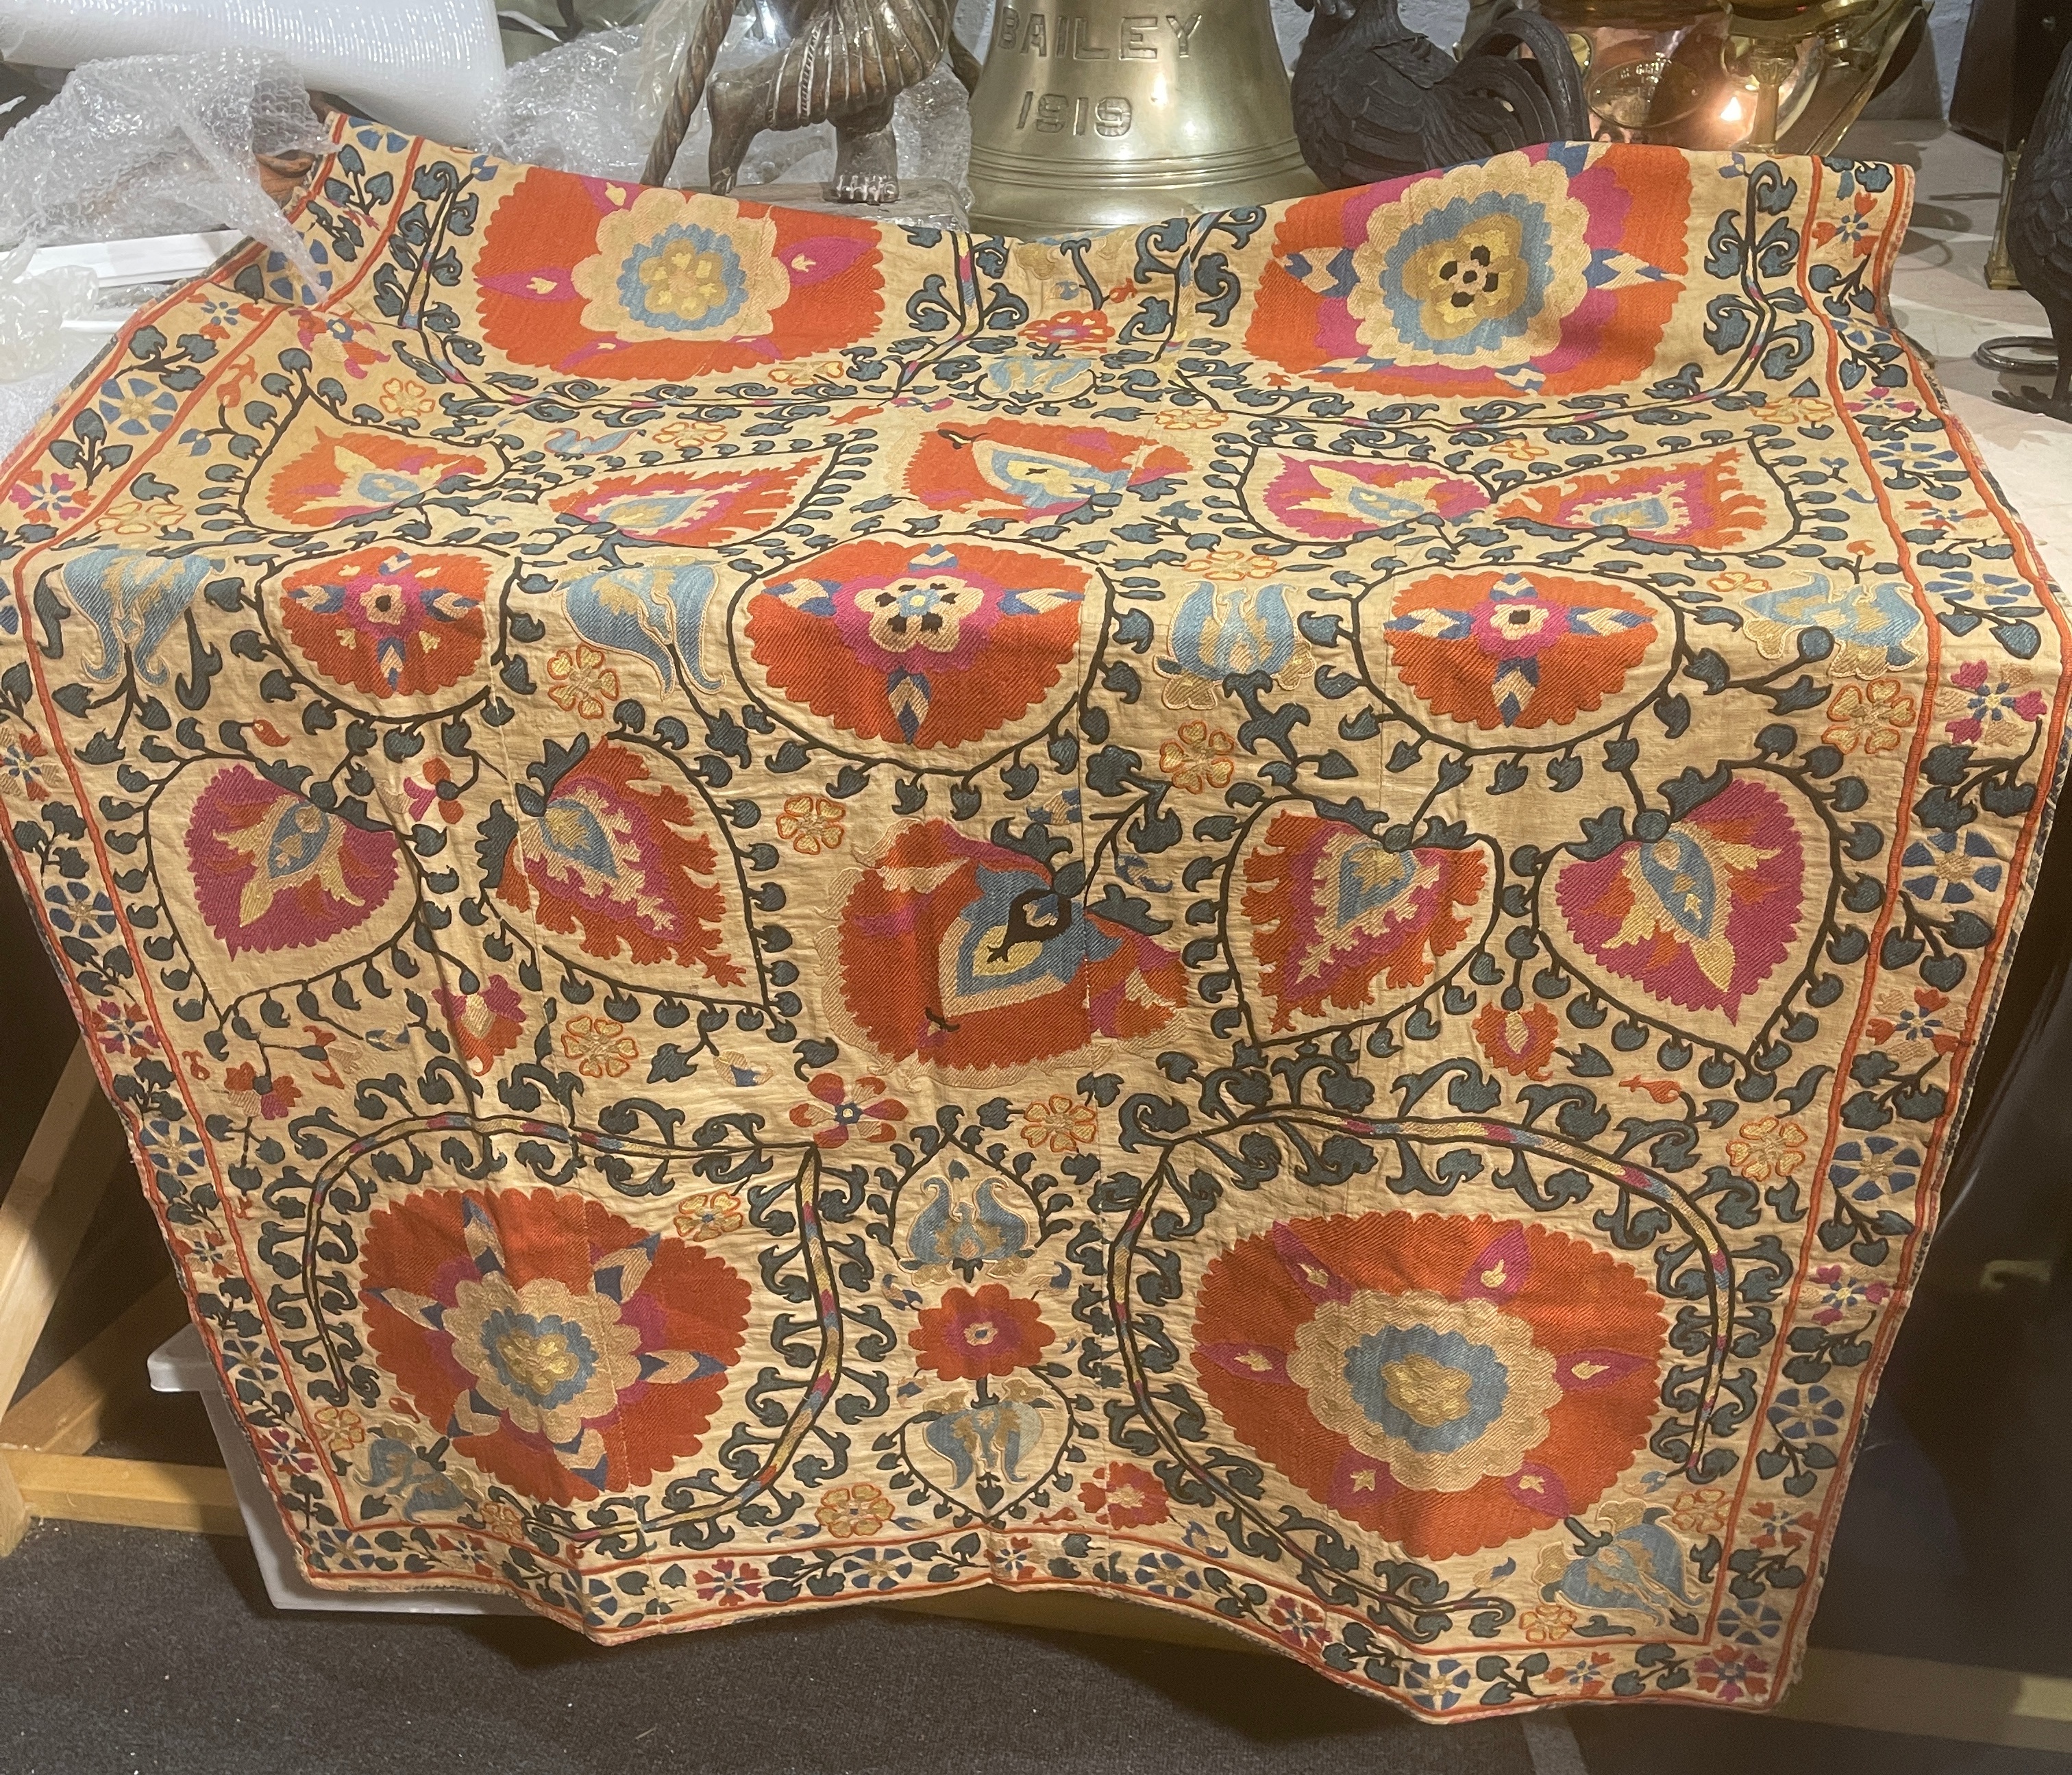 Antique Suzani Textile - Uzbekistan 19th C - 64.5 x 45 inches - Image 9 of 18